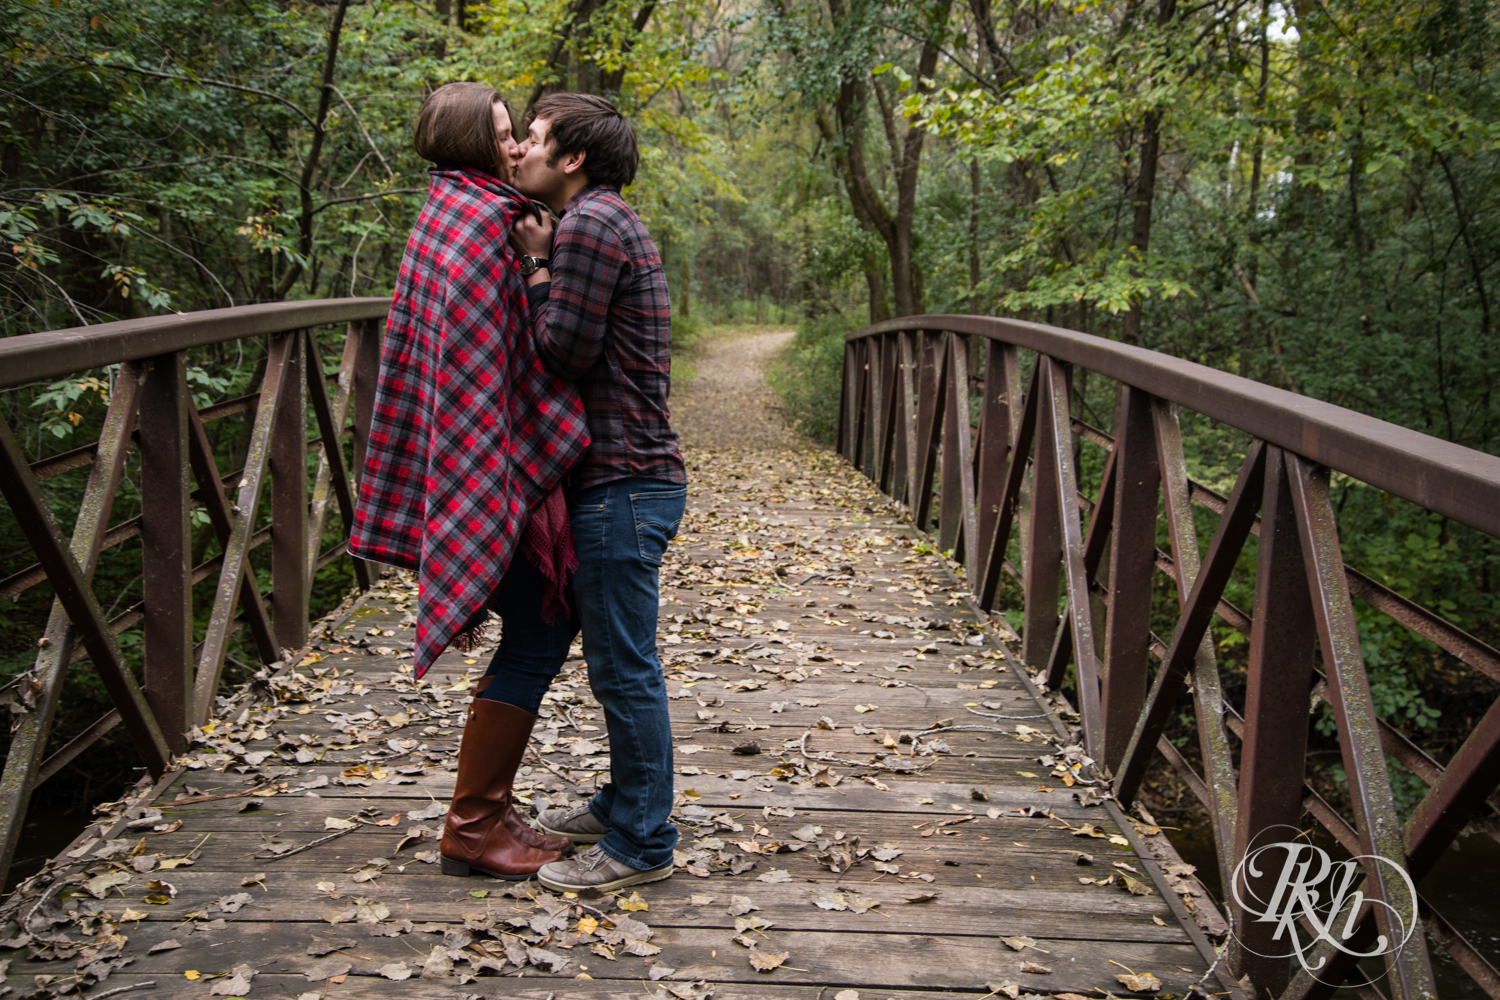 Man and woman kiss on bridge in Minneapolis, Minnesota.